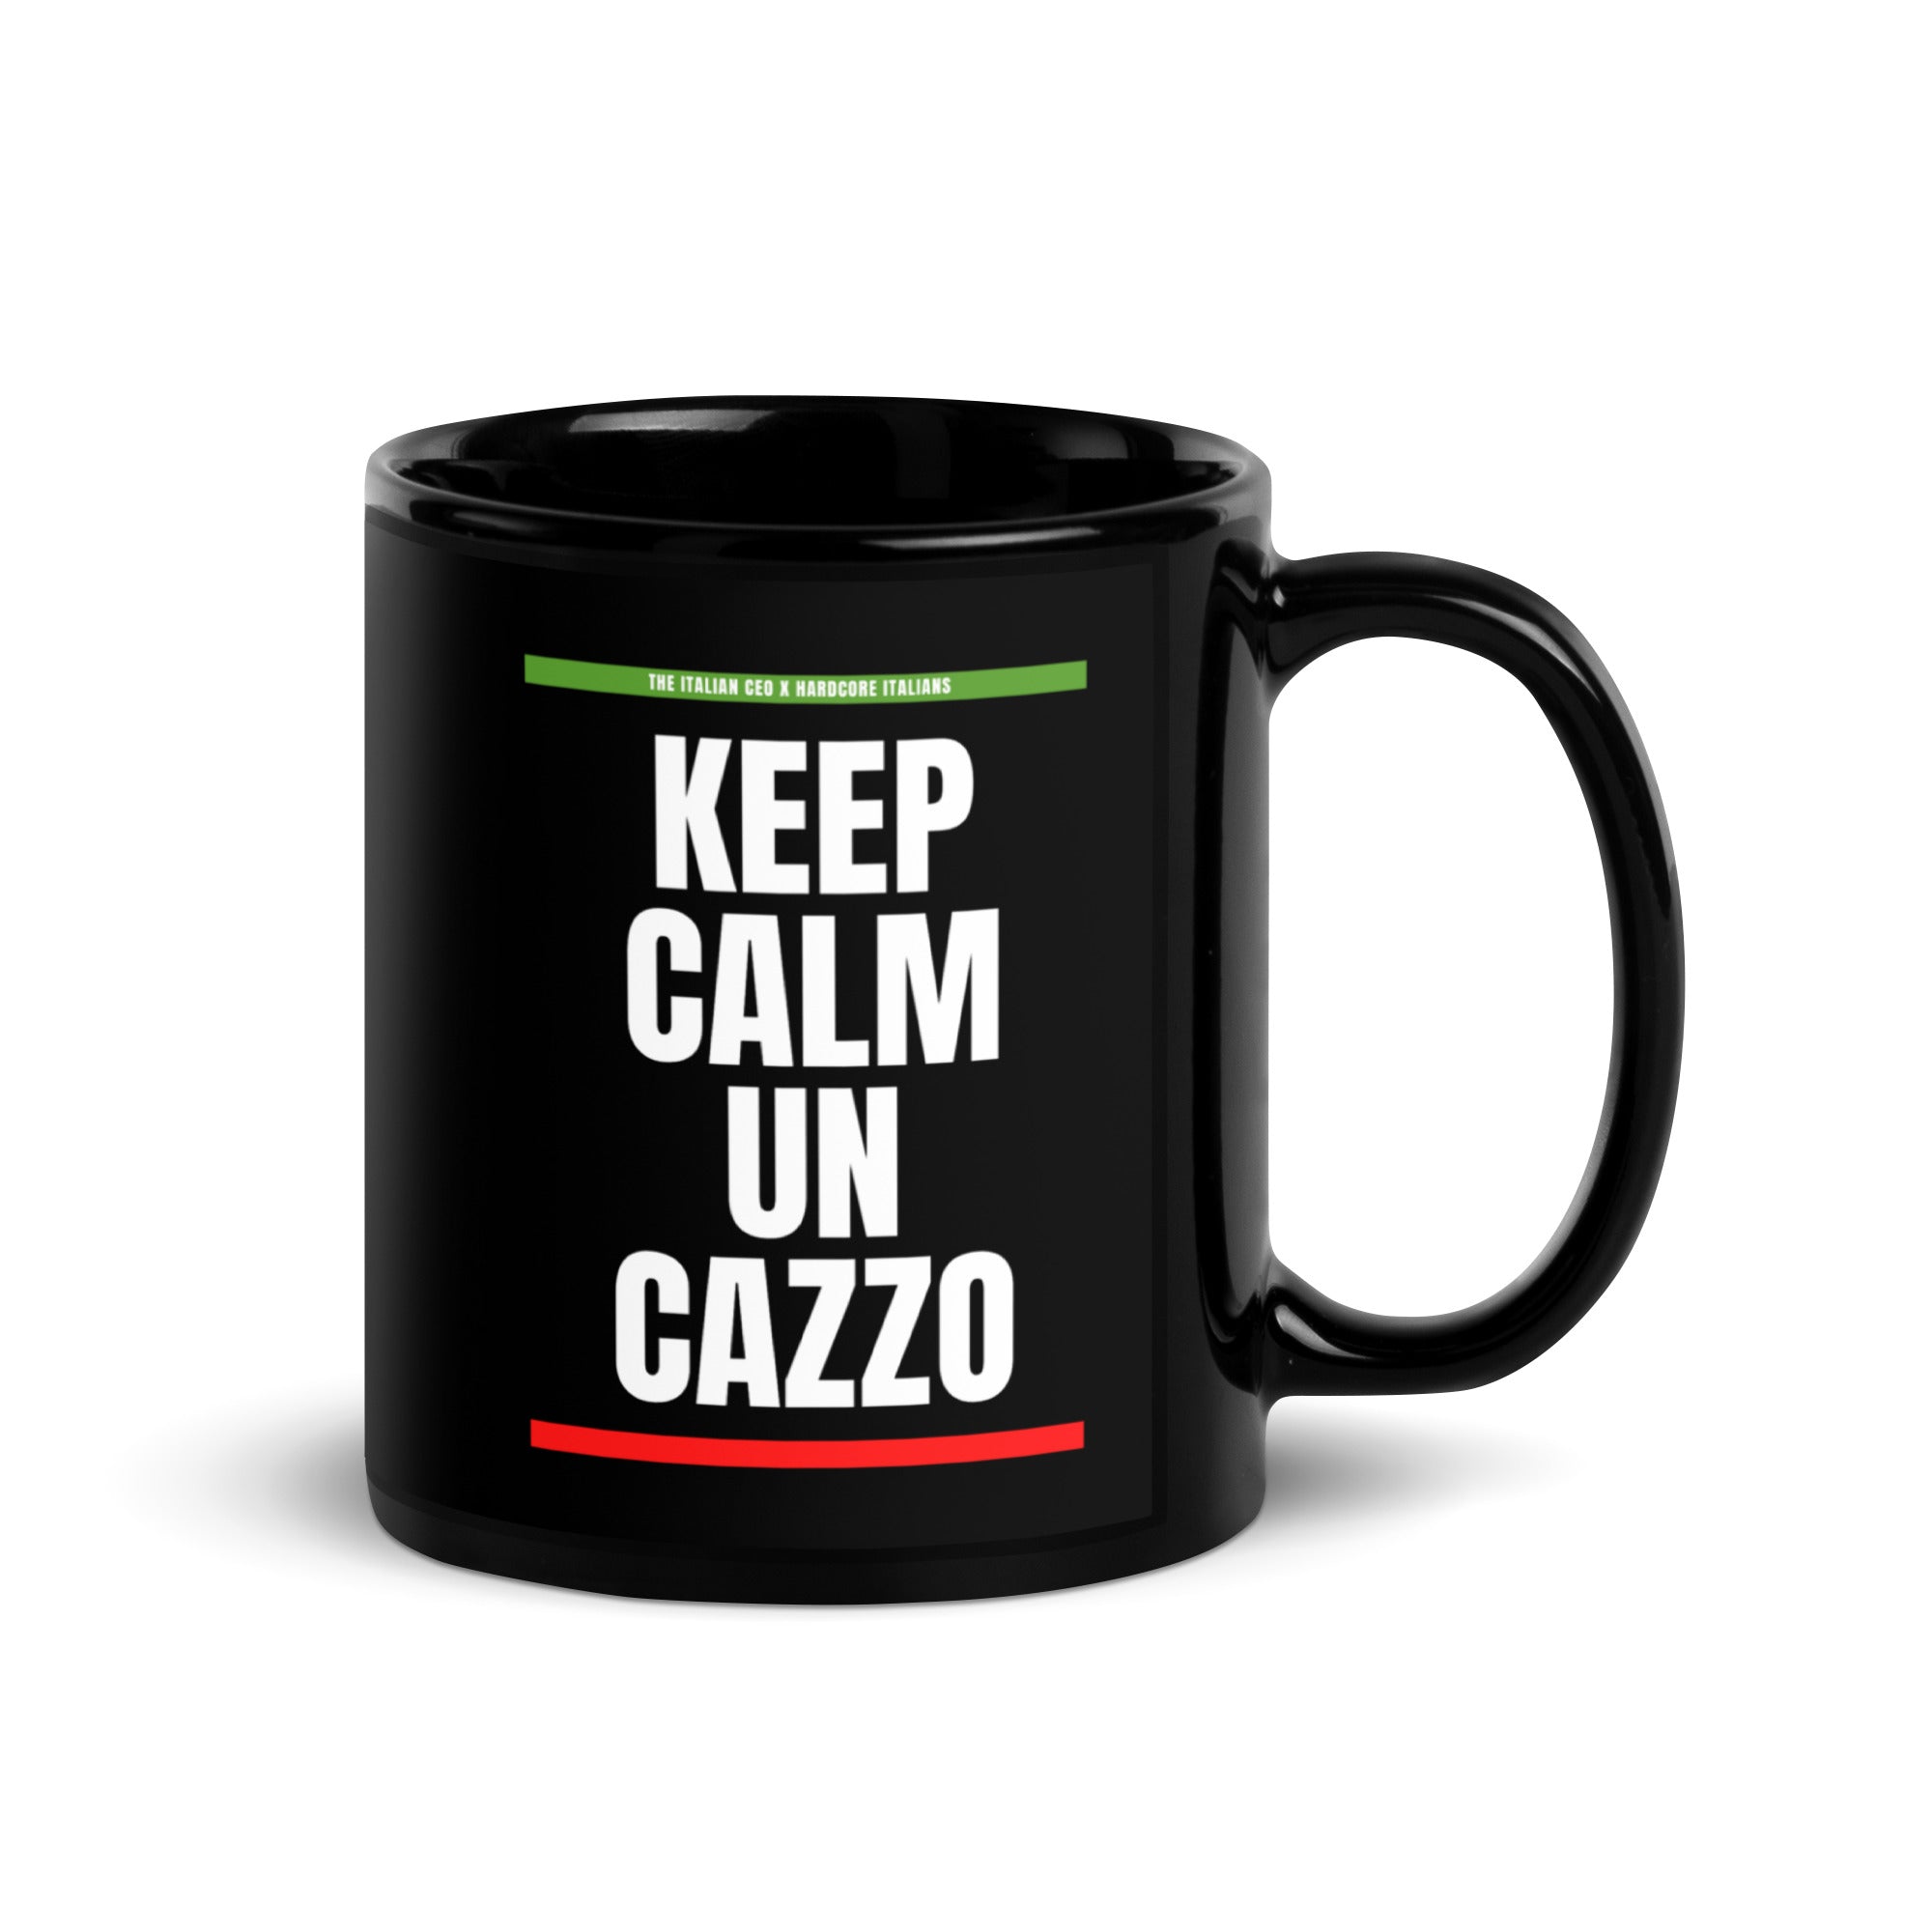 Keep Calm Un Cazzo Coffee Mug Jessica Marchi x Hardcore Italians